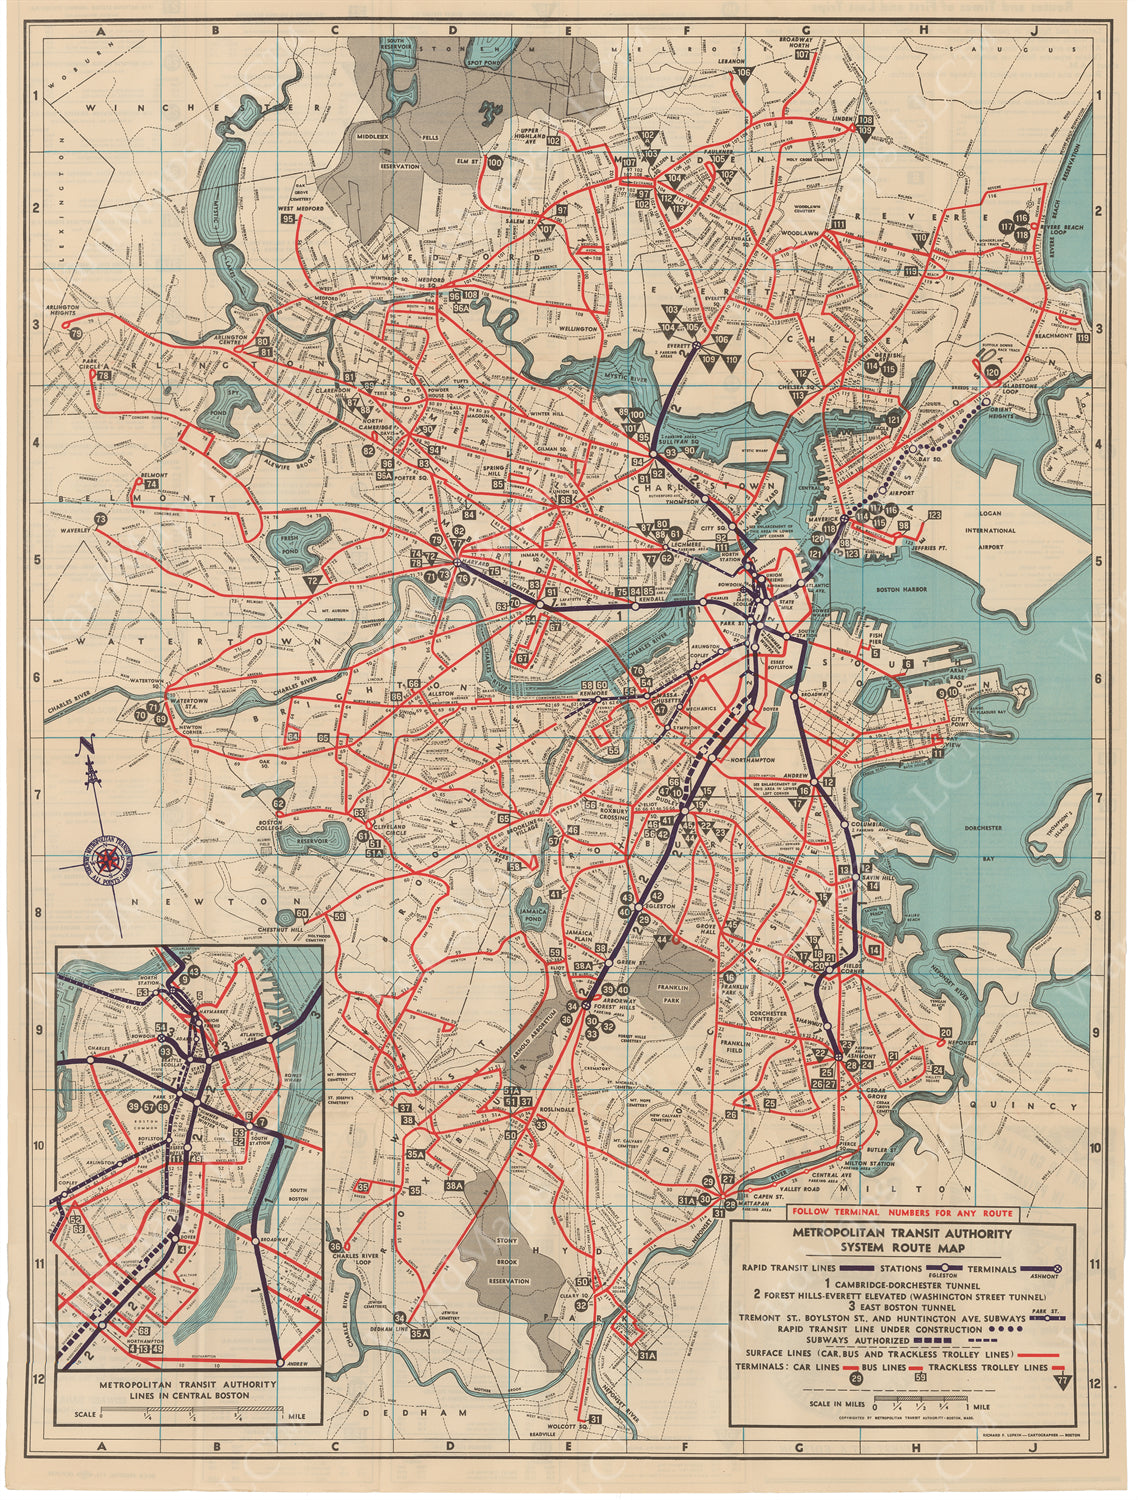 Boston, Massachusetts MTA System Route Map #1 1949